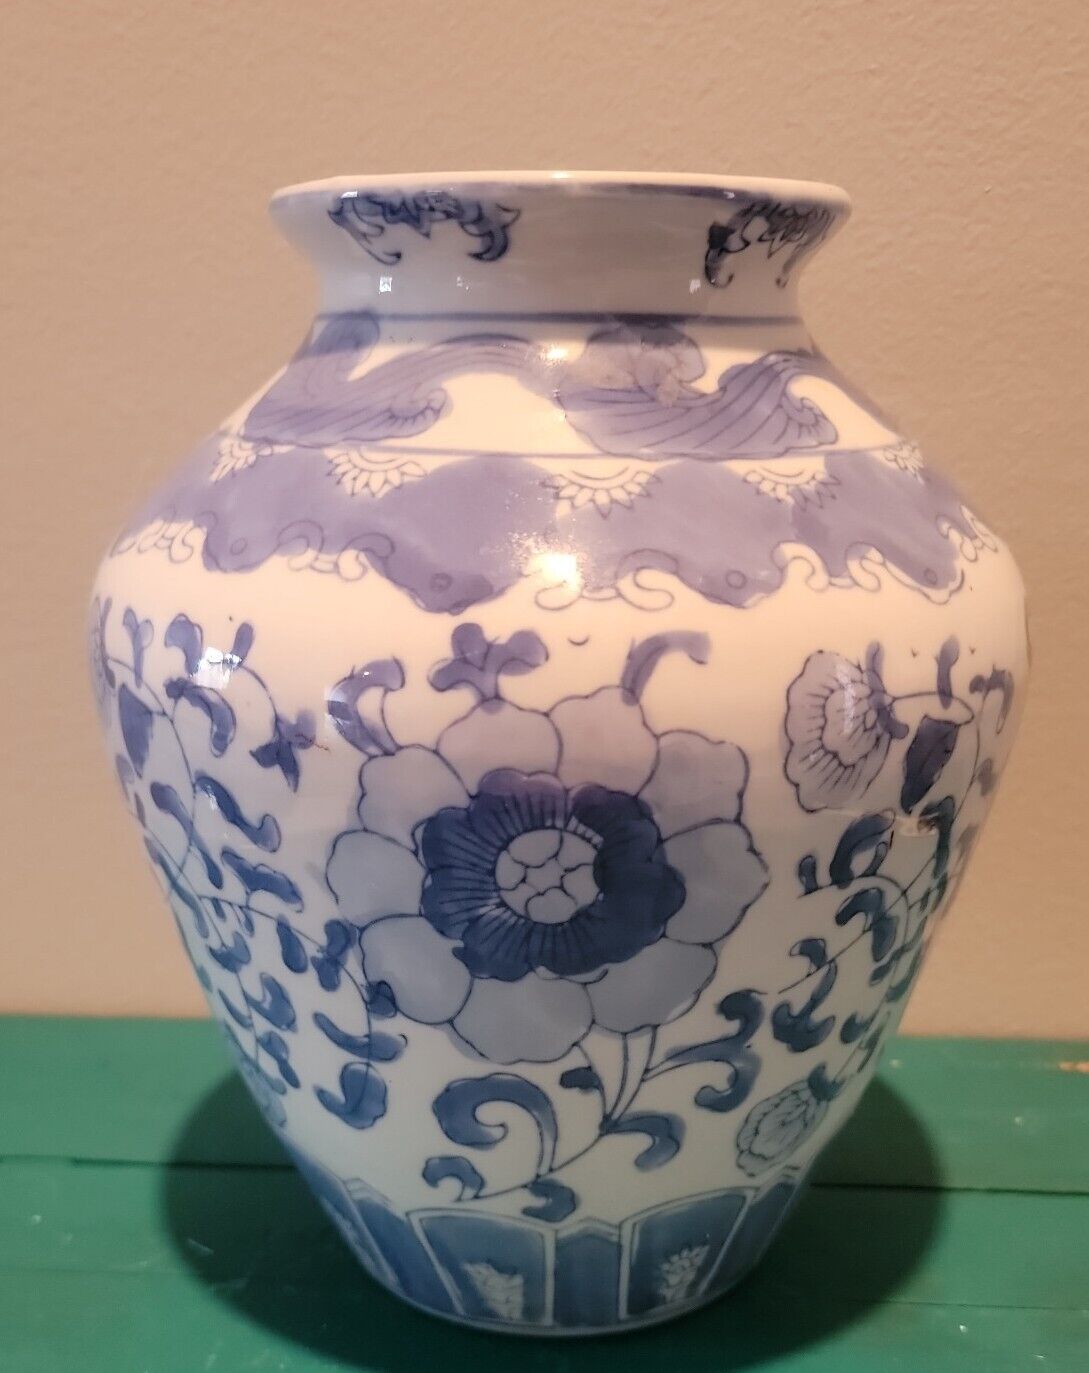 Blue And White Asian Vase